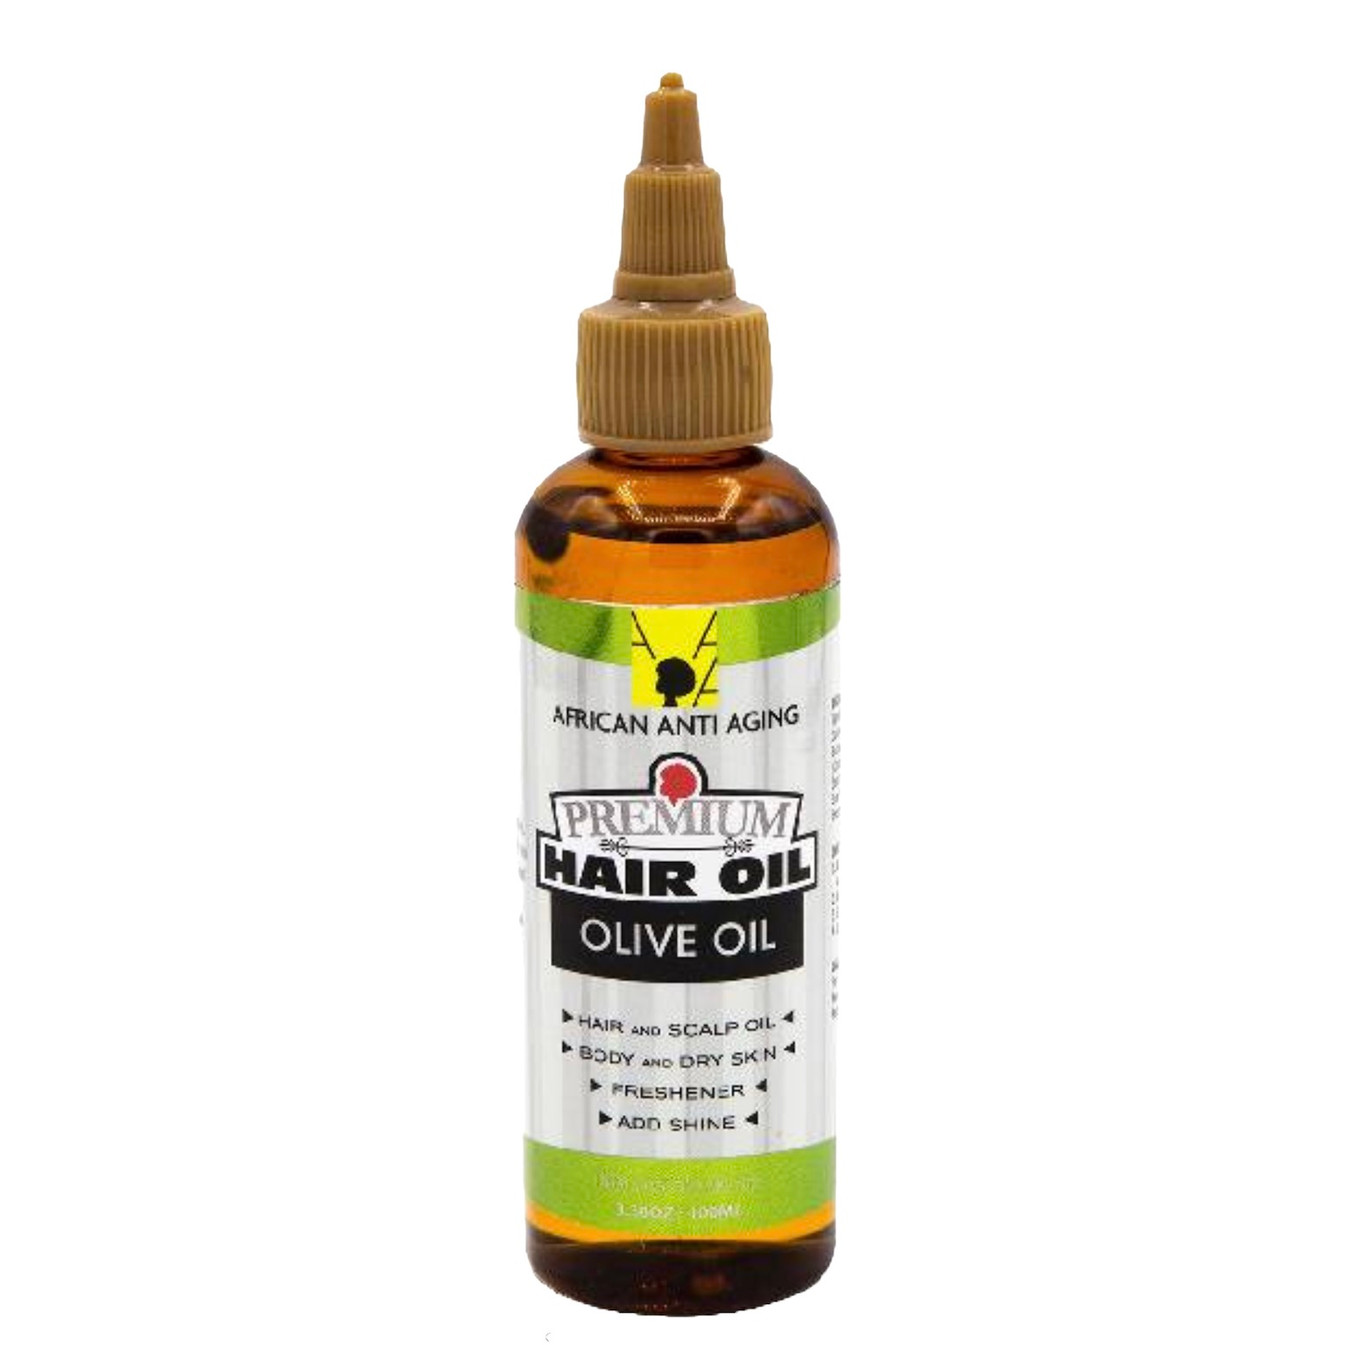 African Anti Aging  Premium Hair Oil - Olive